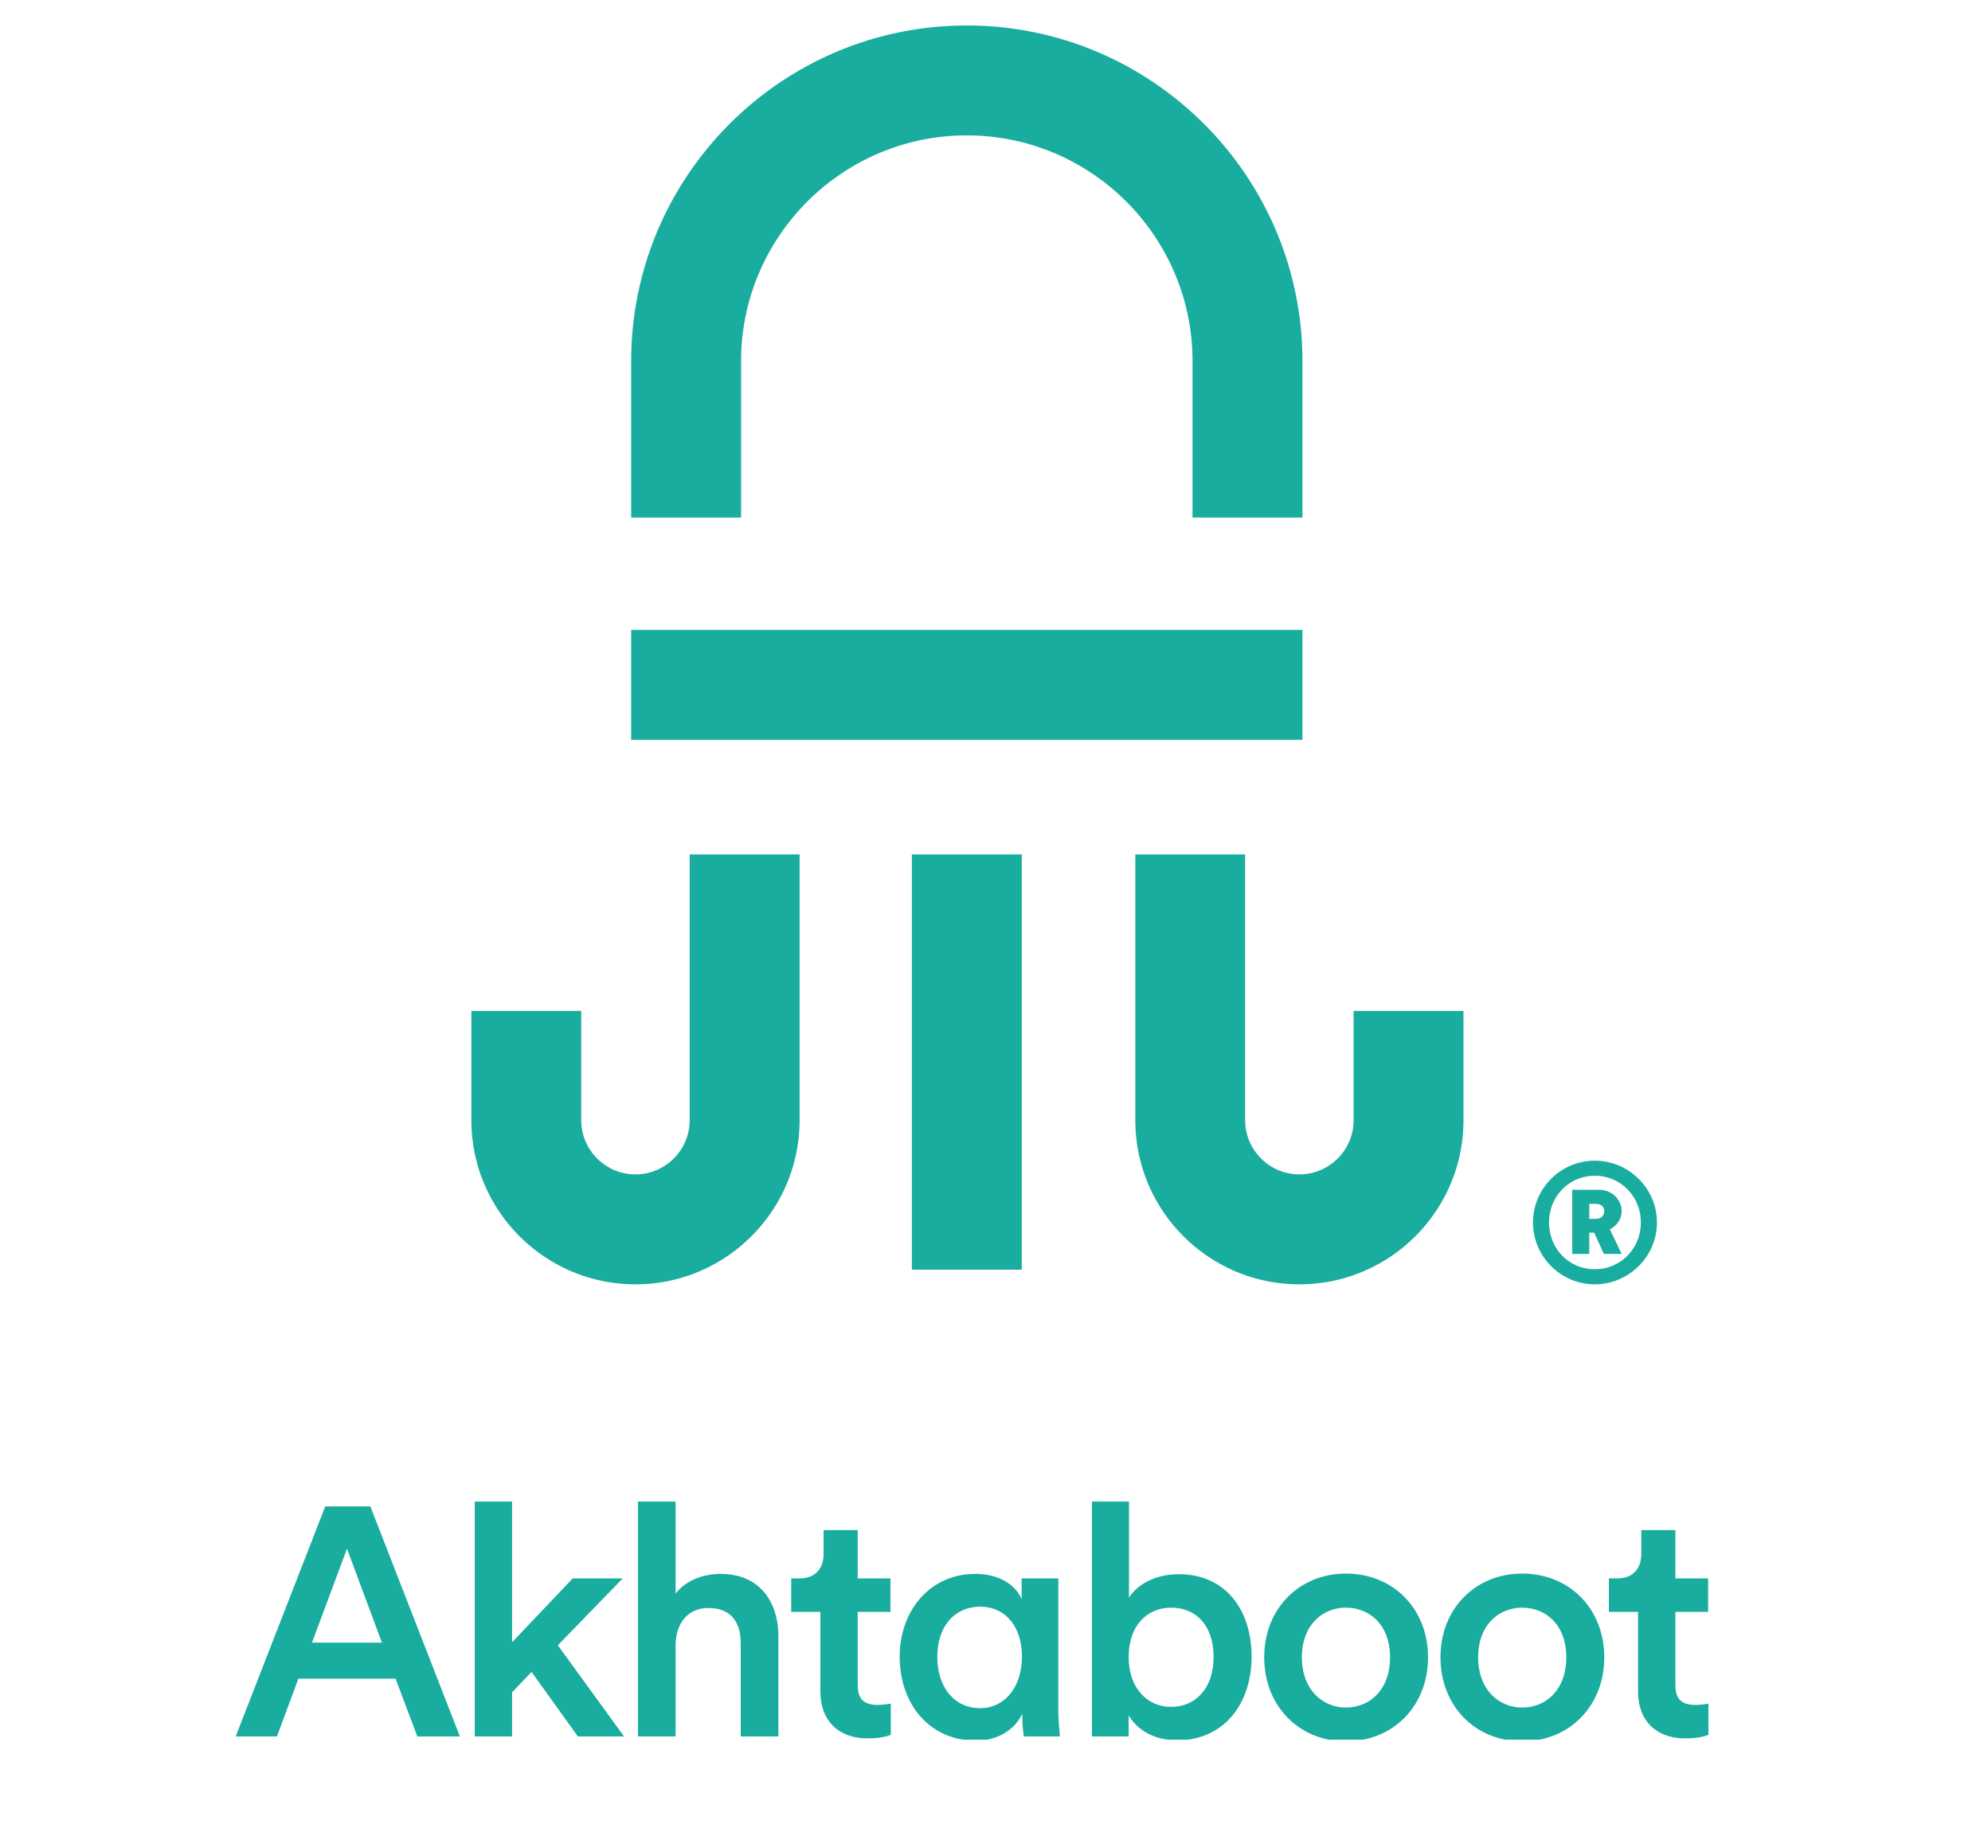 Akhtaboot Marketing